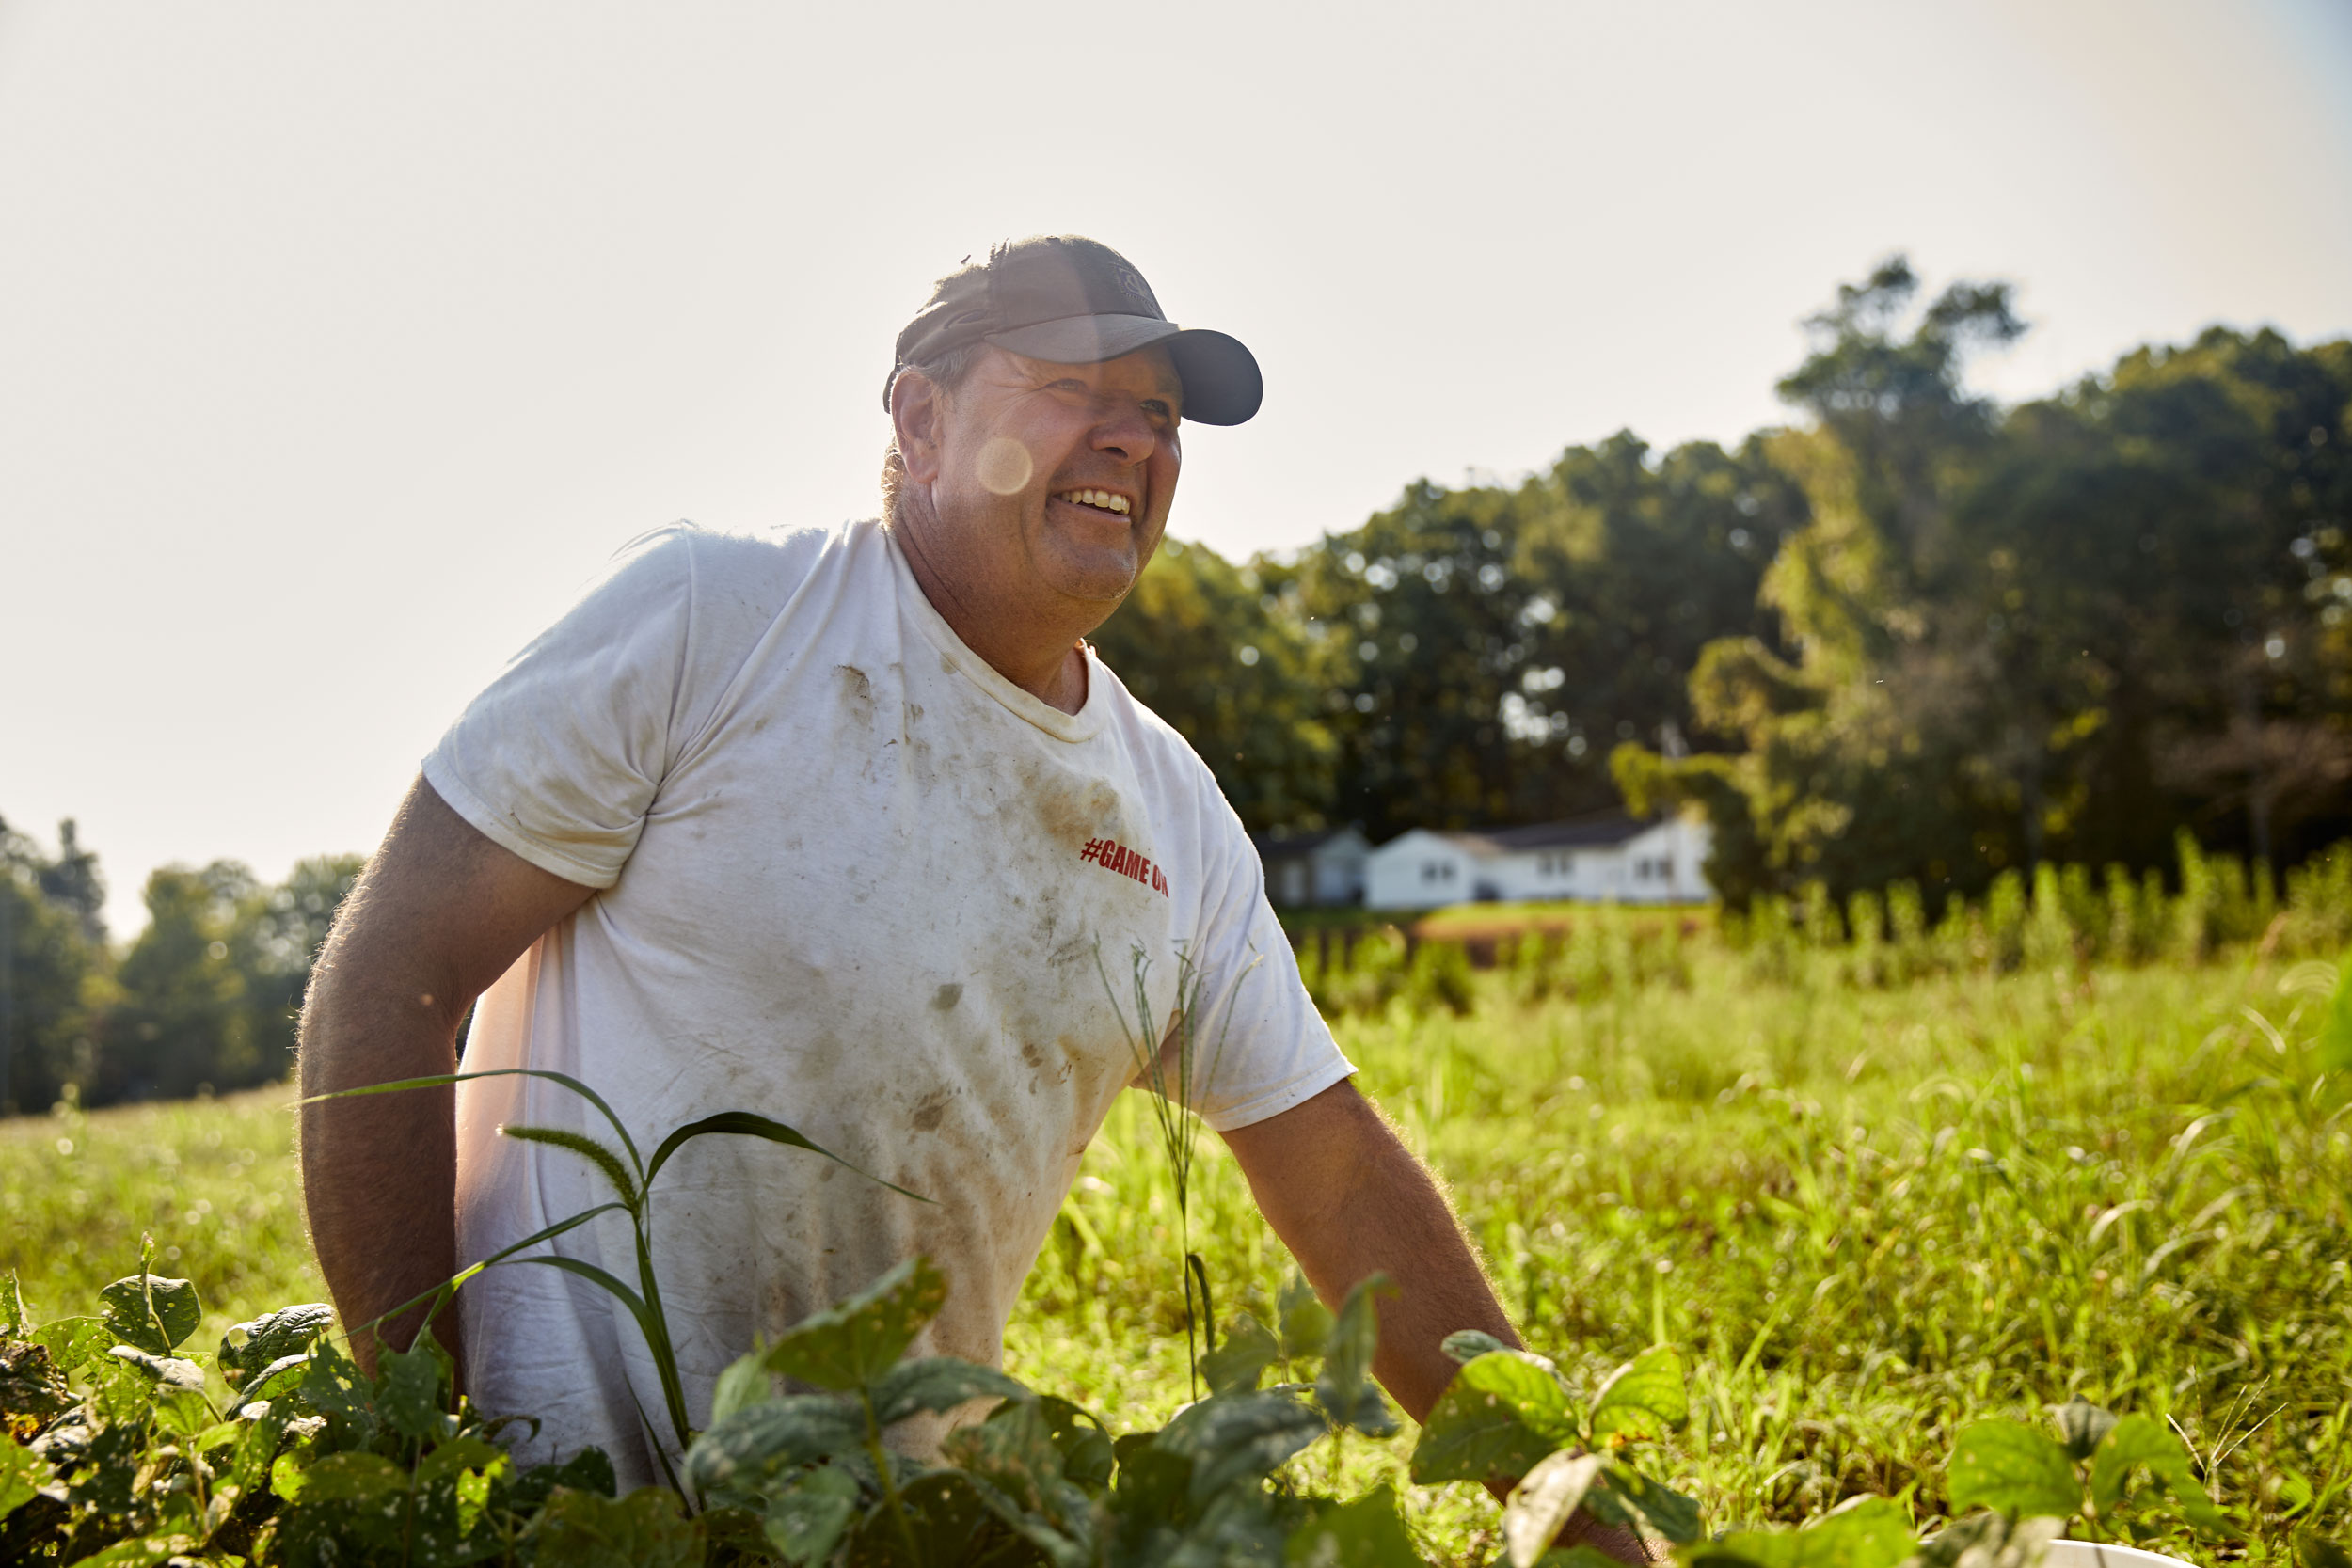 Farmer Jack Gurley laughs while tending to produce on Calvert